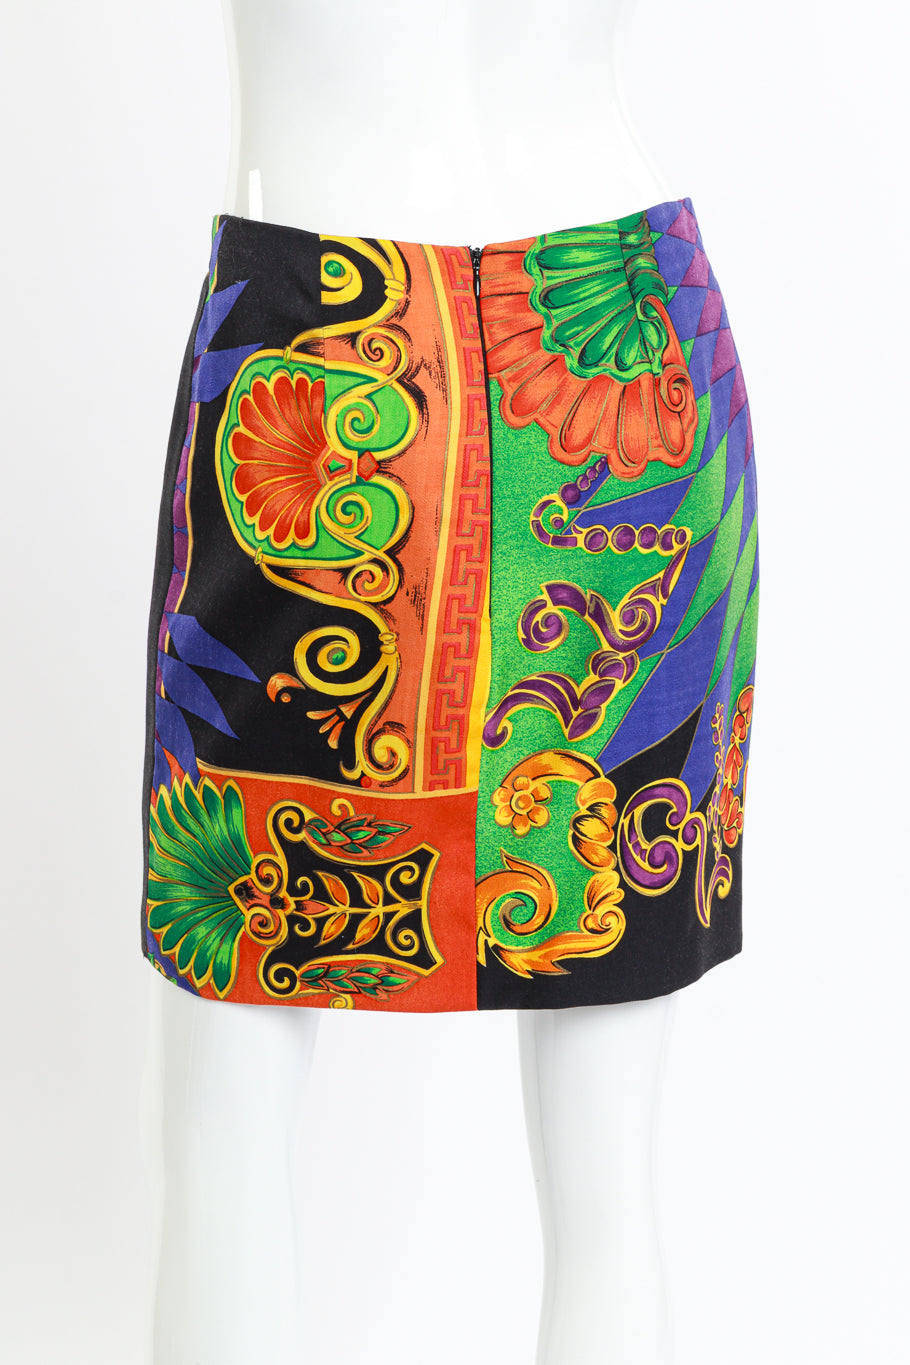 Versace 1991 Cornucopia of Prints Skirt Suit skirt back mannequin @RECESS LA